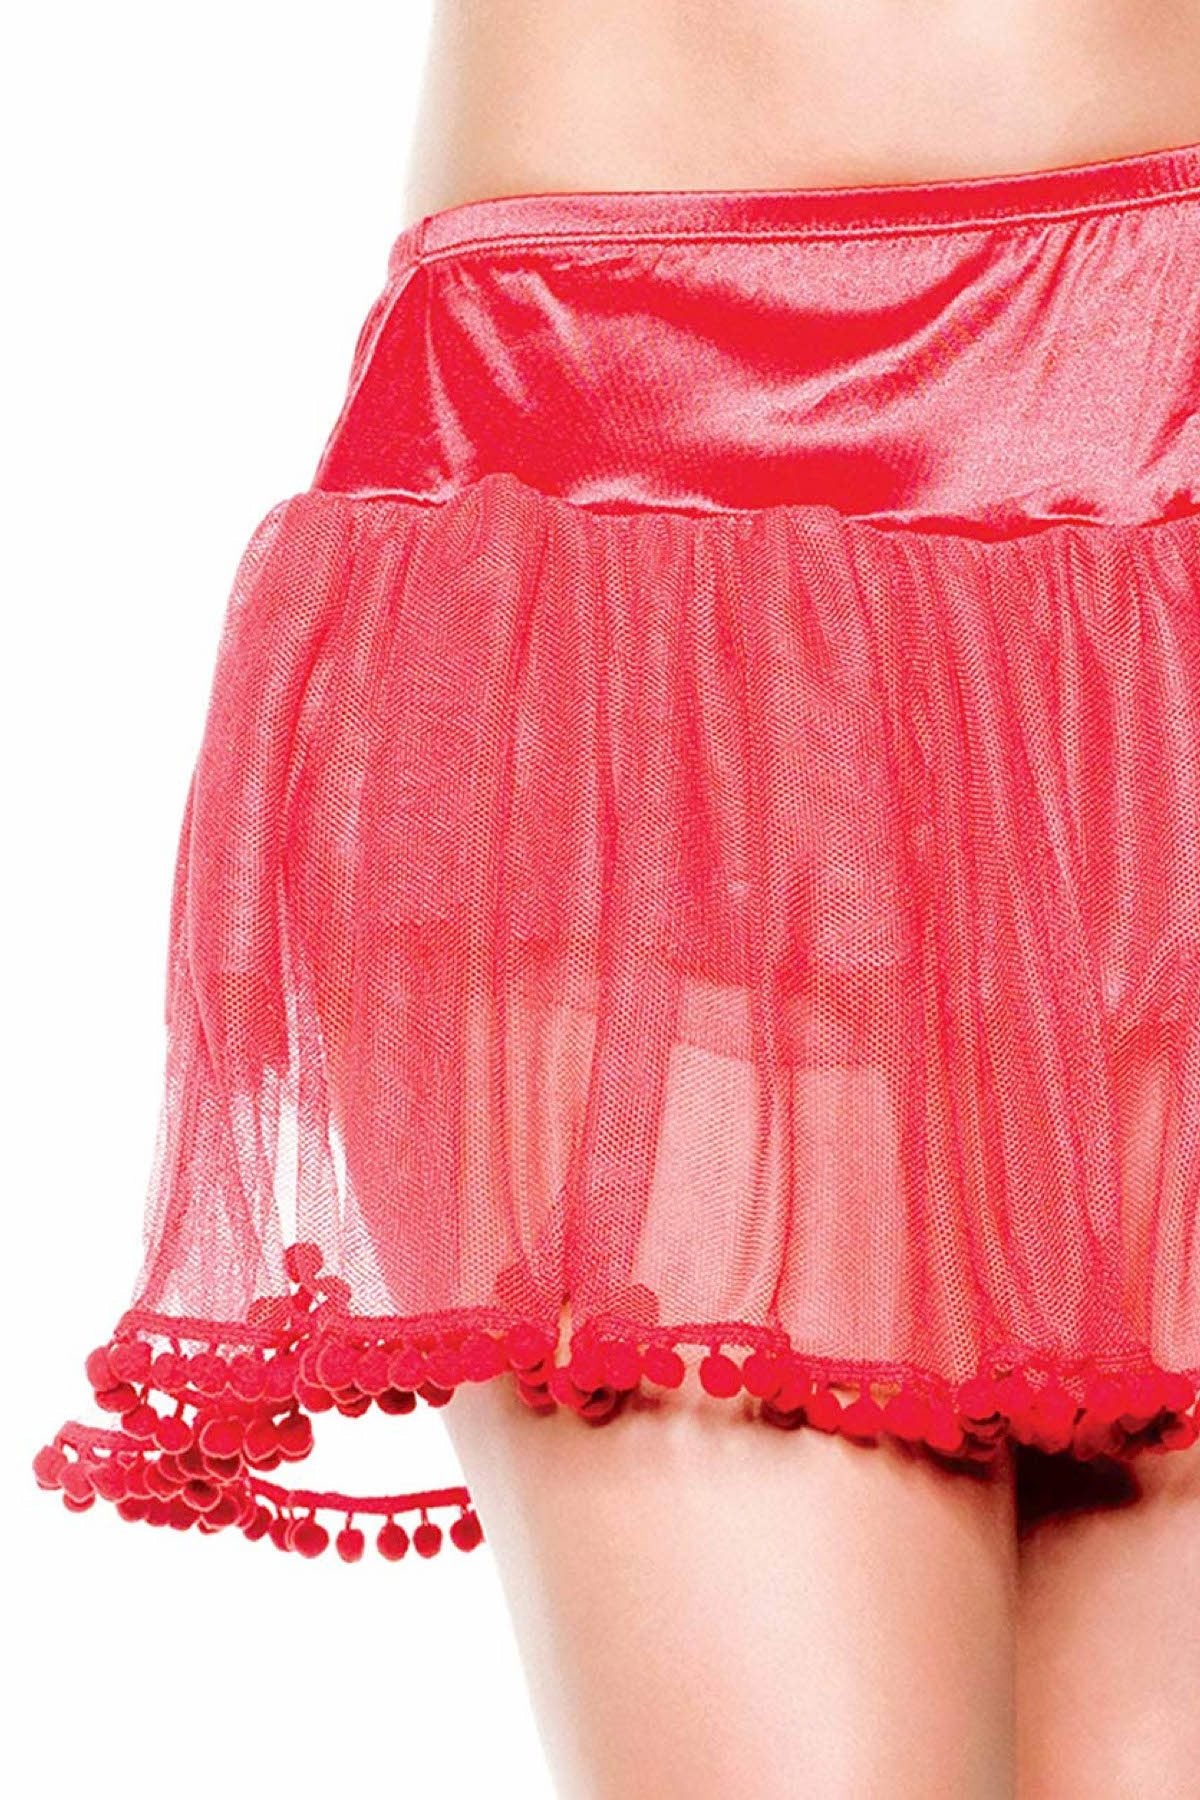 Seven 'Til Midnight PLUS Red PomPom Petticoat